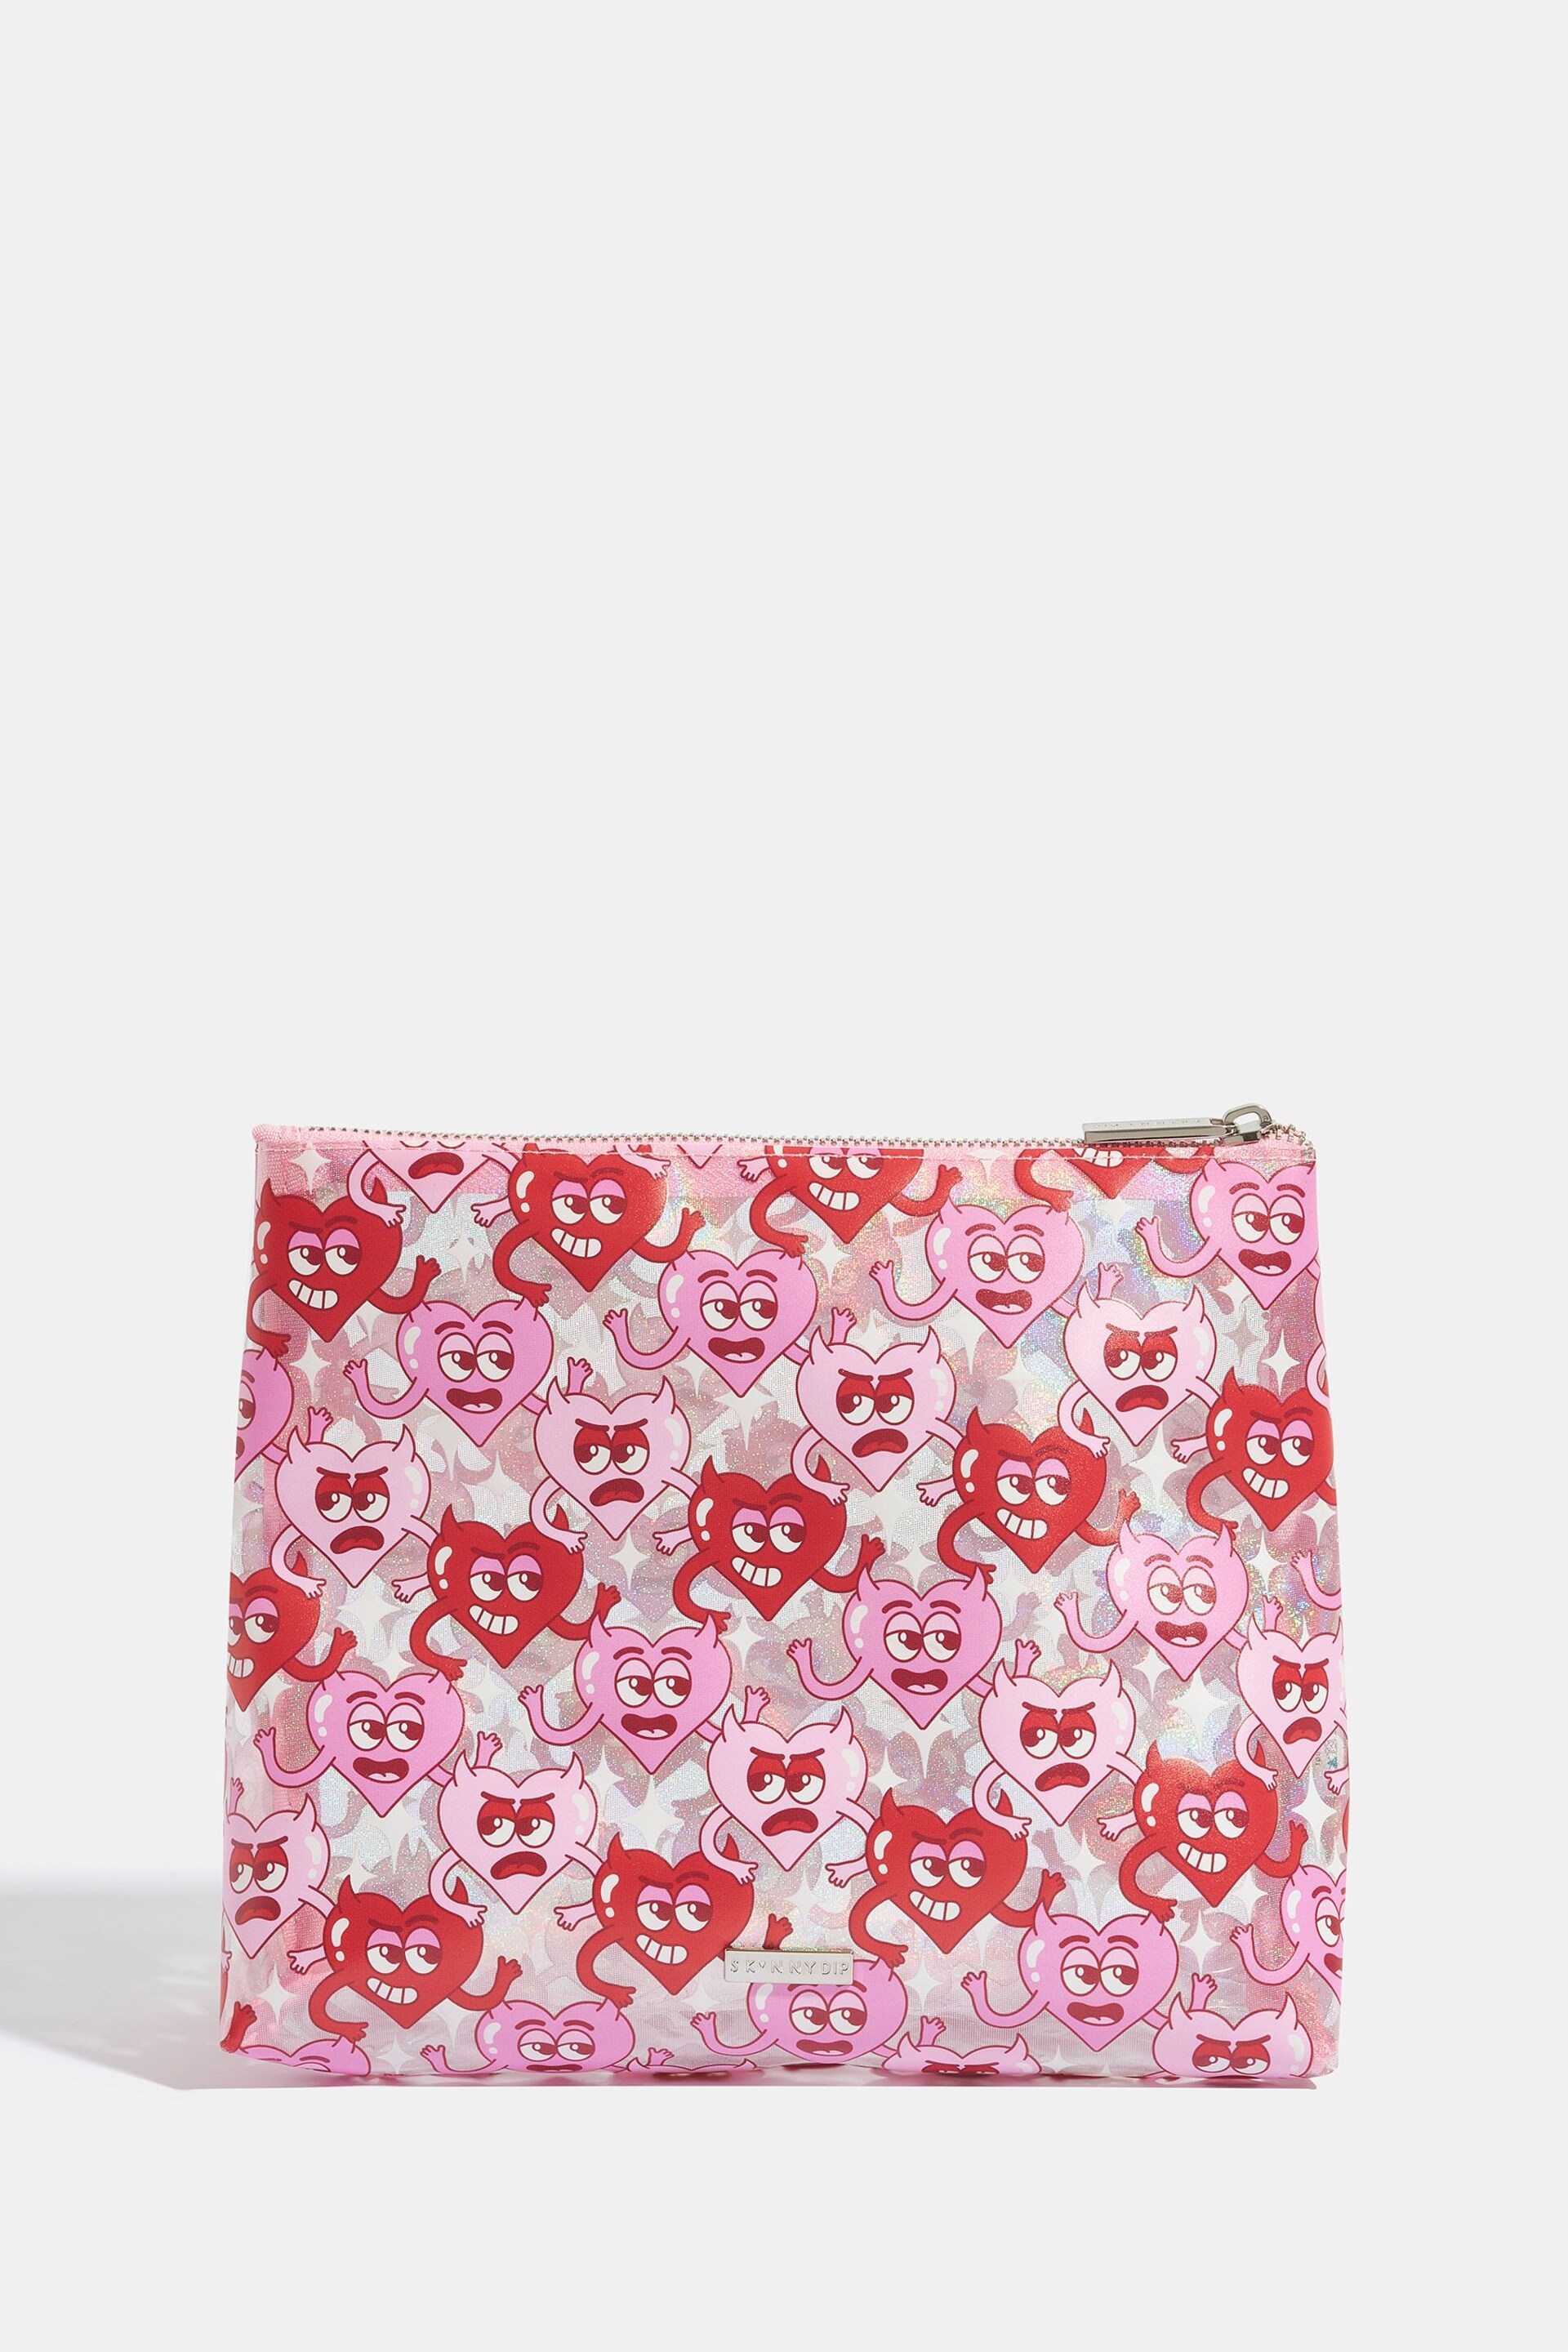 Skinnydip Pink Moody Heart Wash Bag - Image 2 of 4